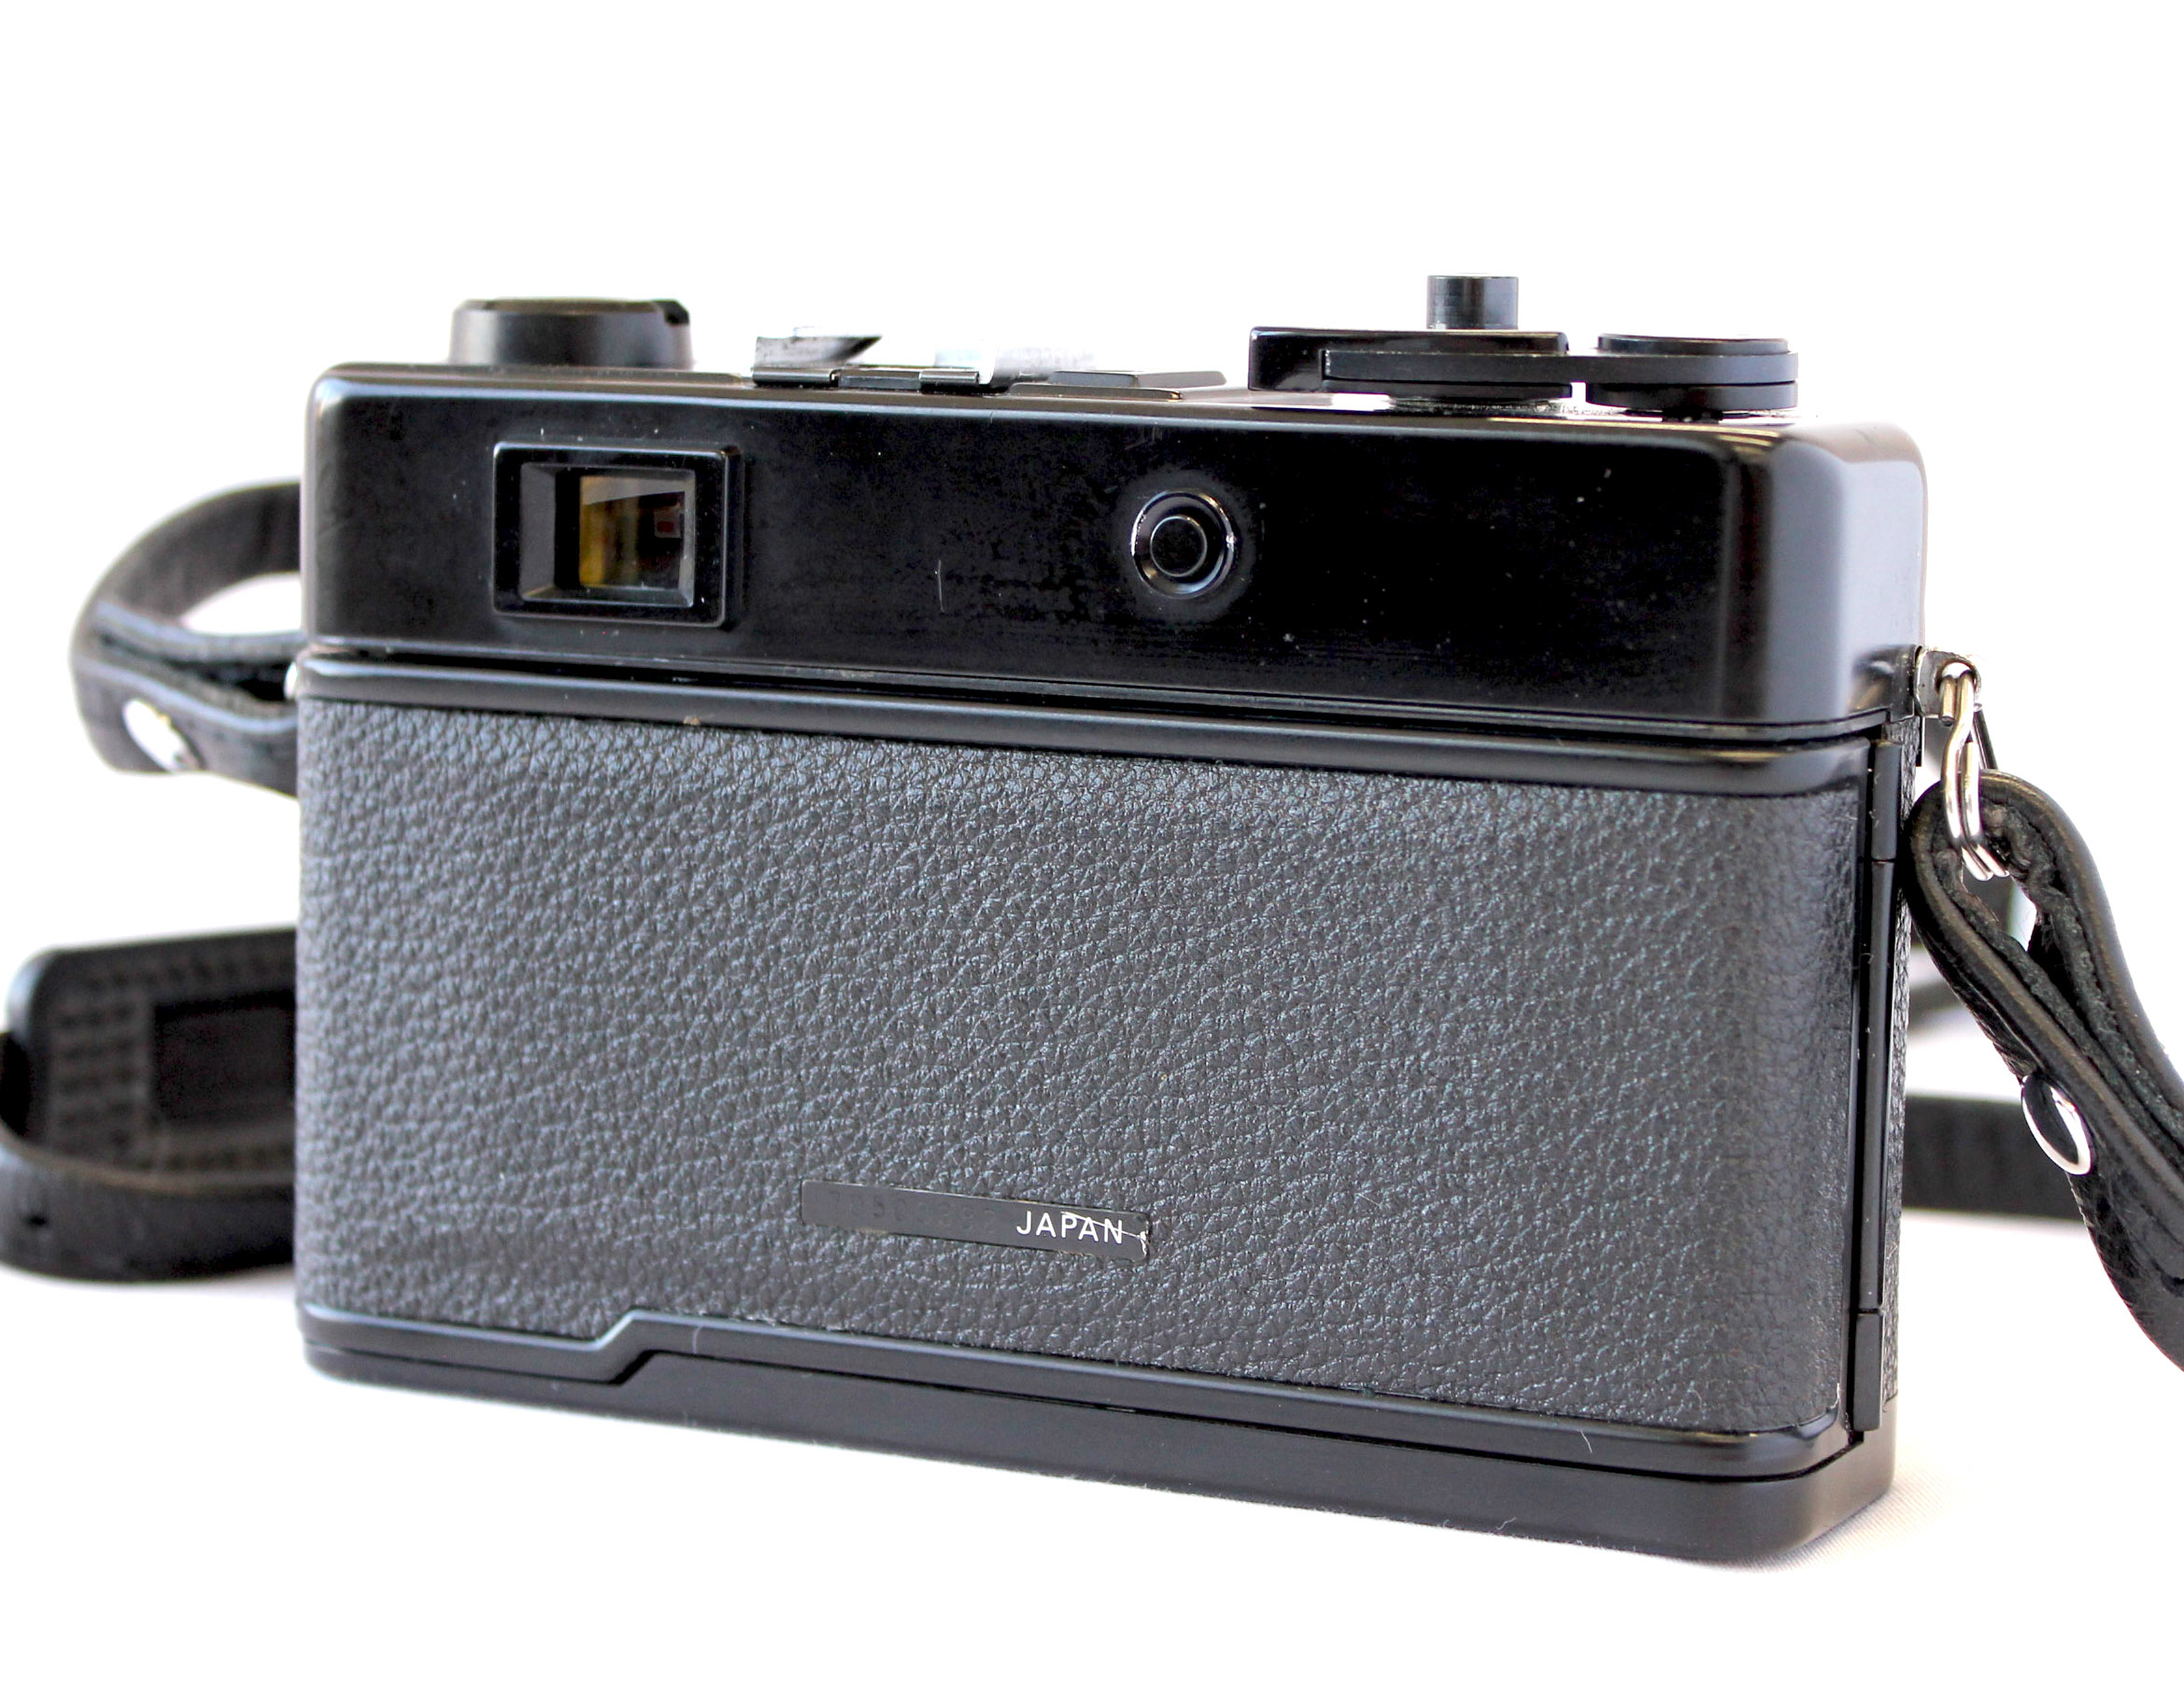  Yashica Electro 35 GX Rangefinder Camera Black w/40mm F/1.7 Lens from Japan Photo 4